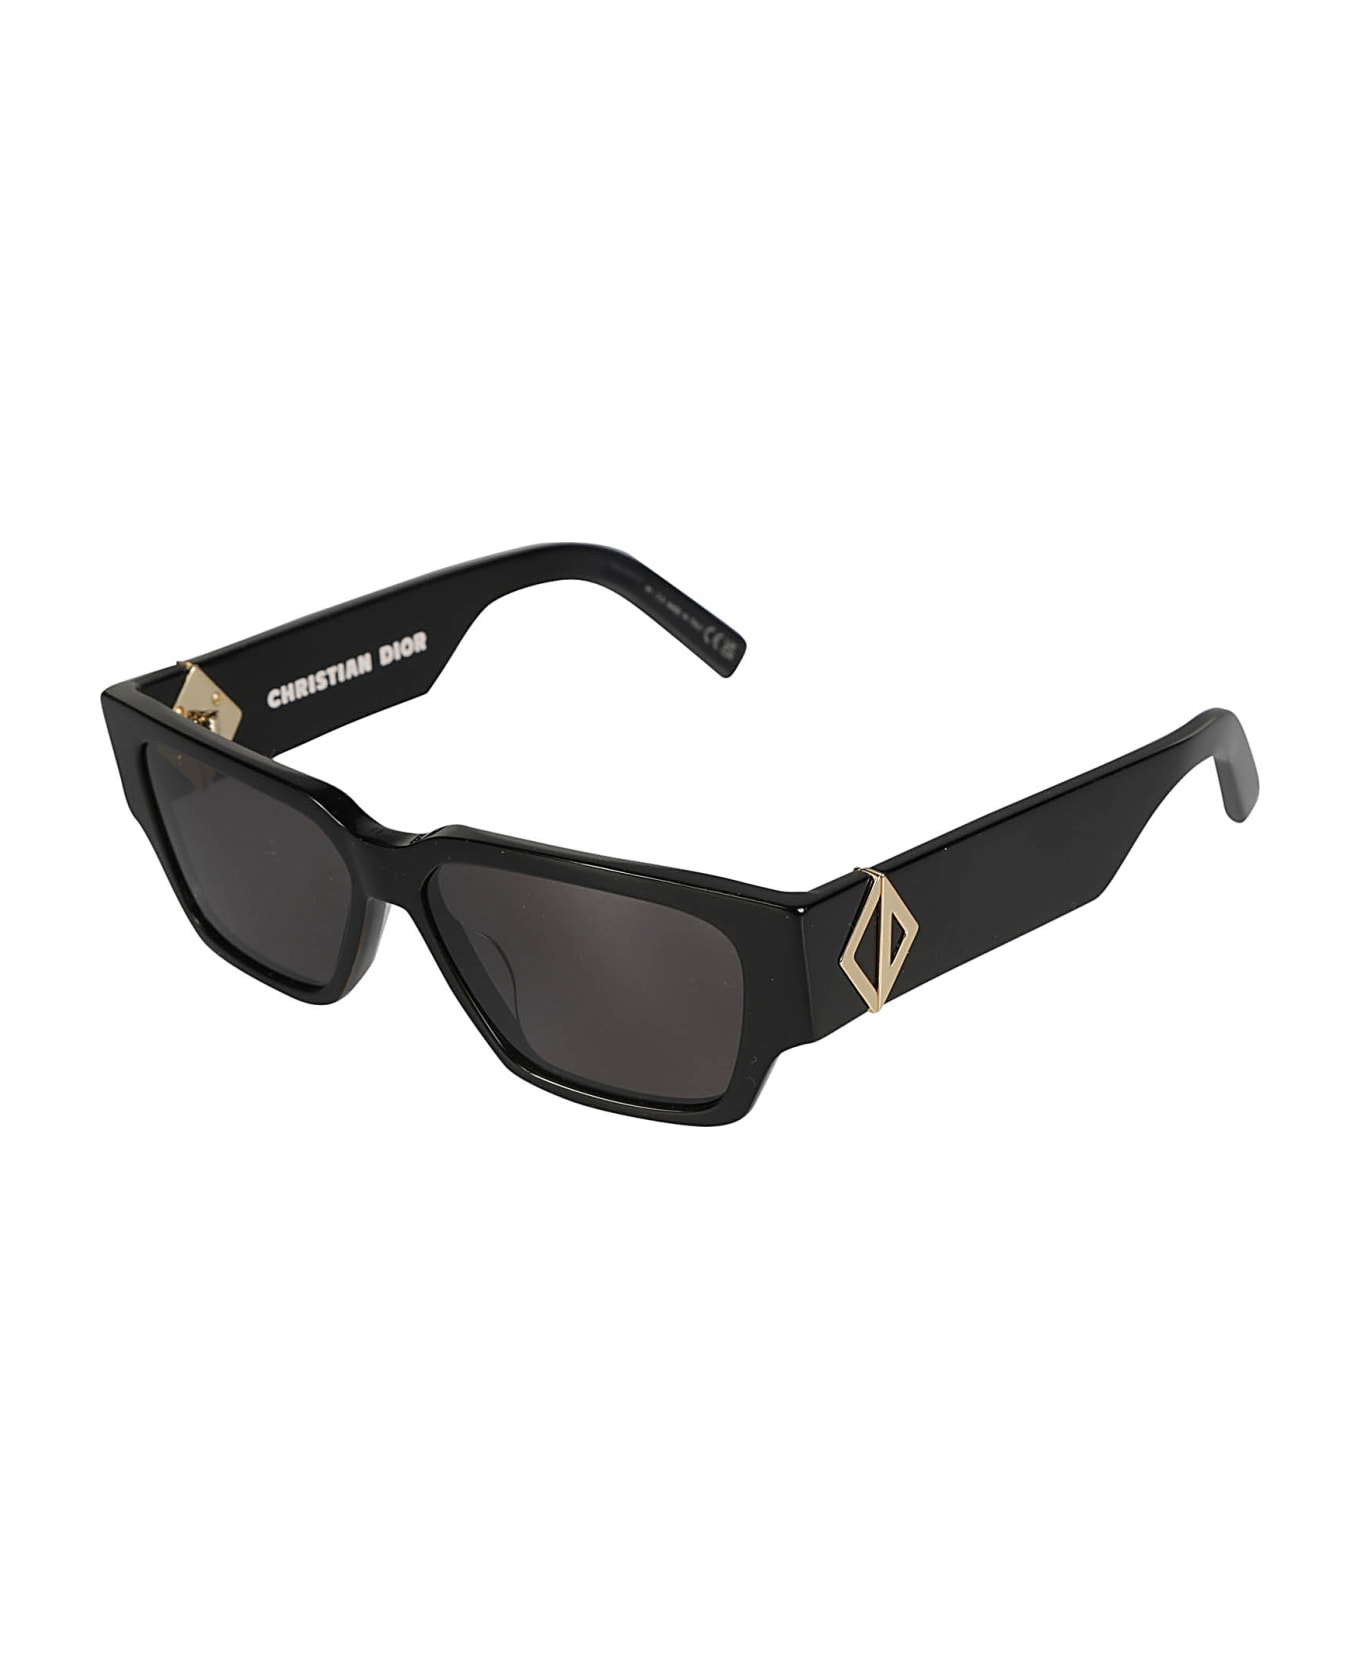 Dior Eyewear Diamond Sunglasses - 10a0 サングラス